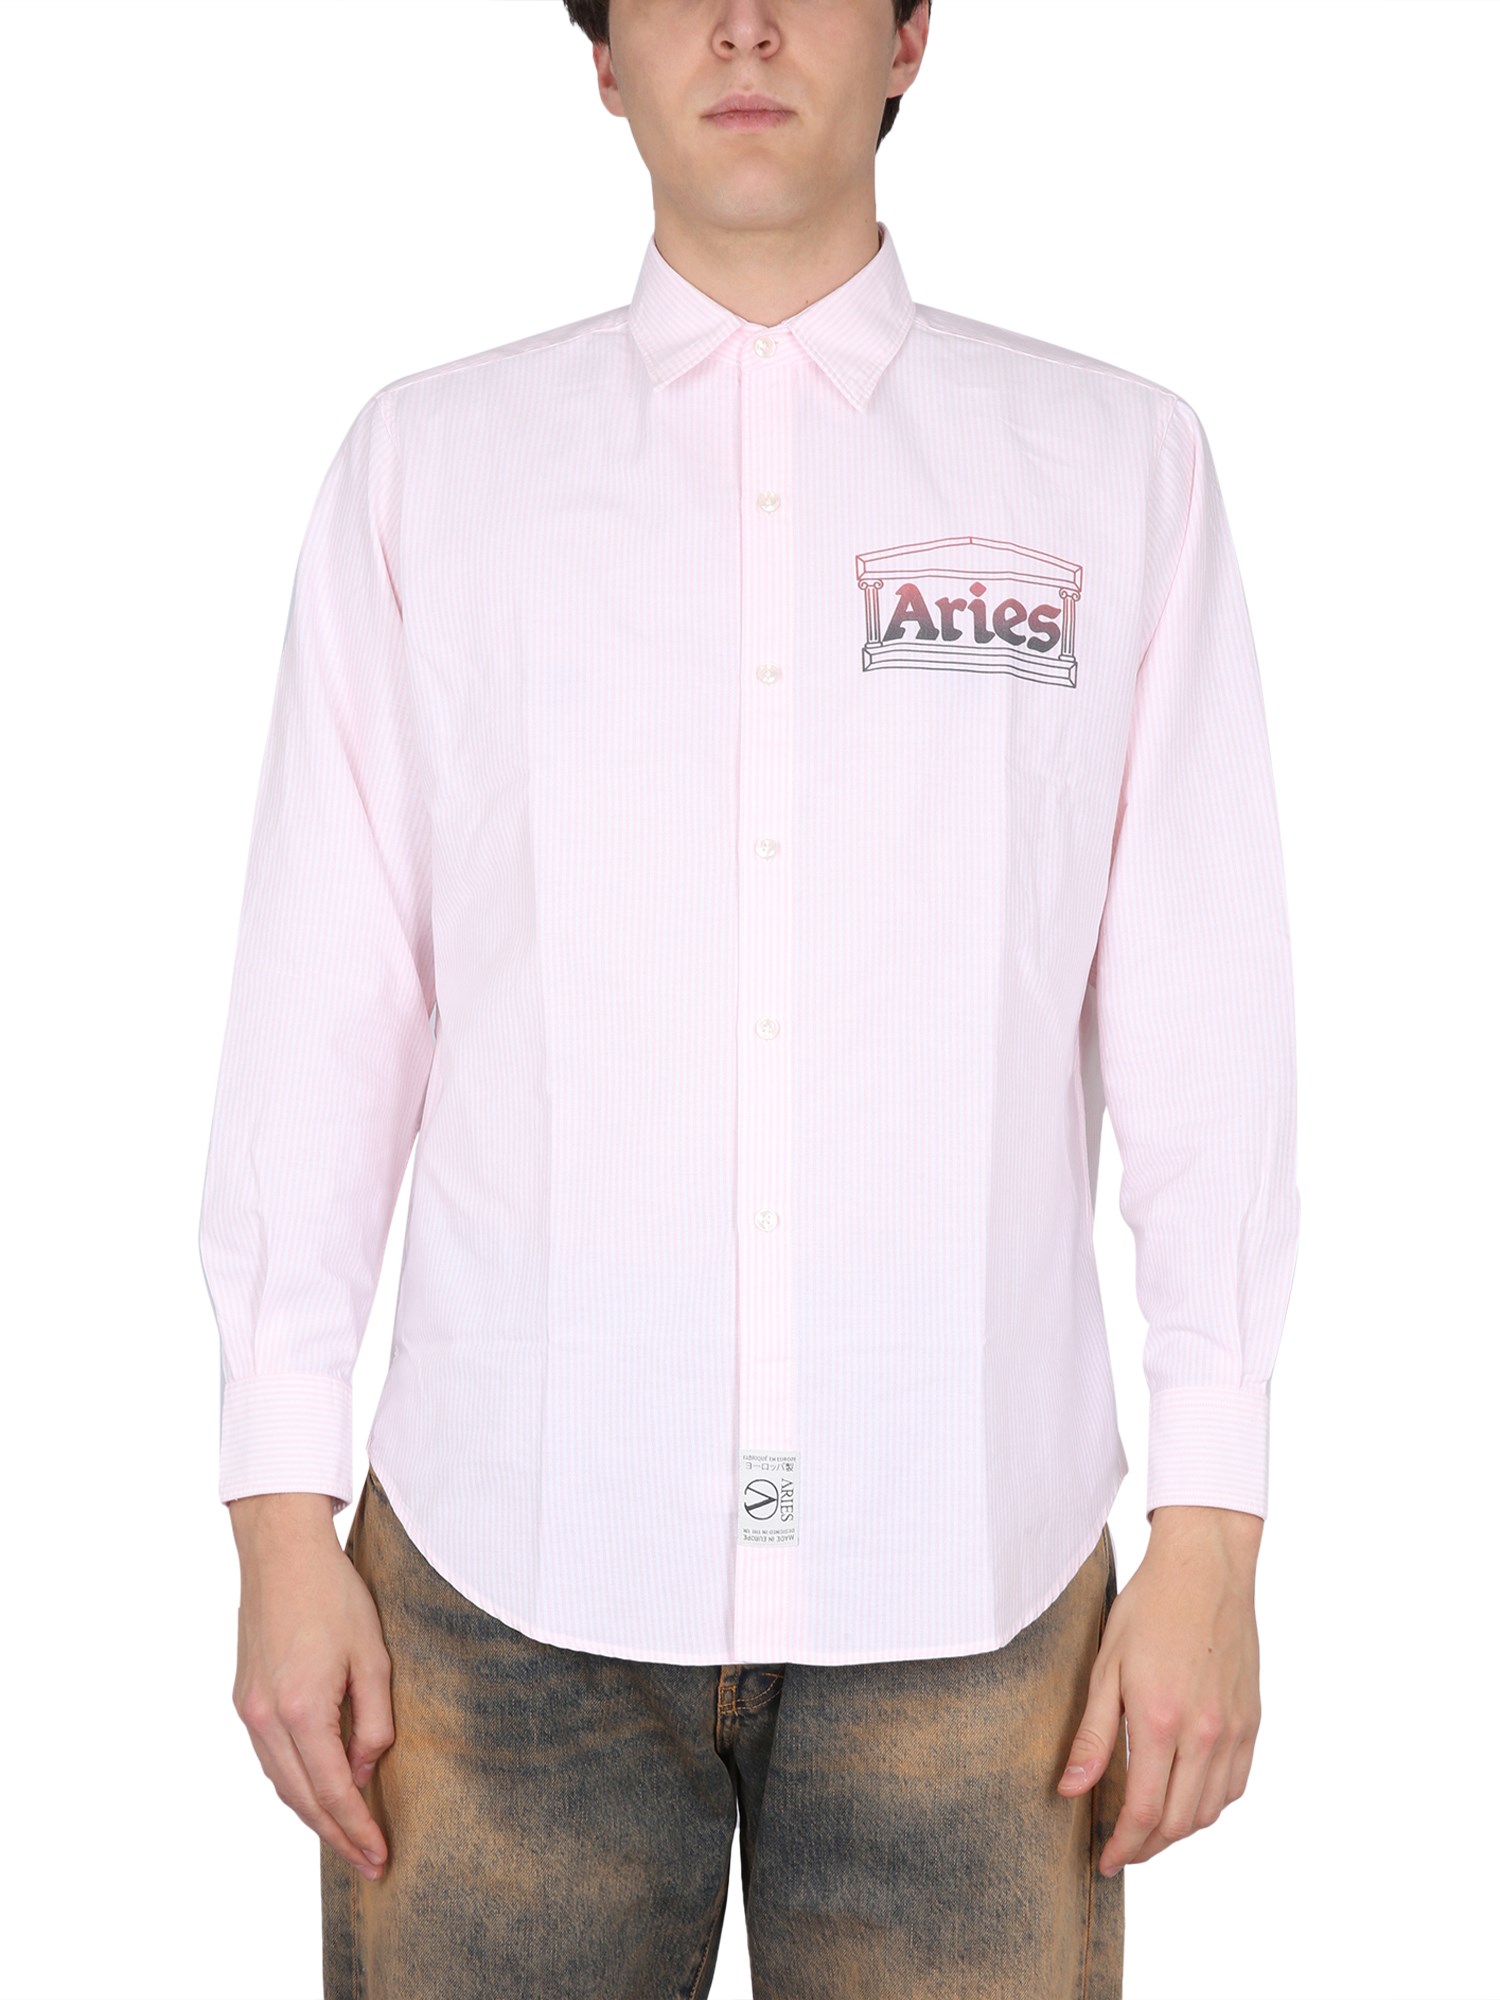 Aries aries shirt with logo